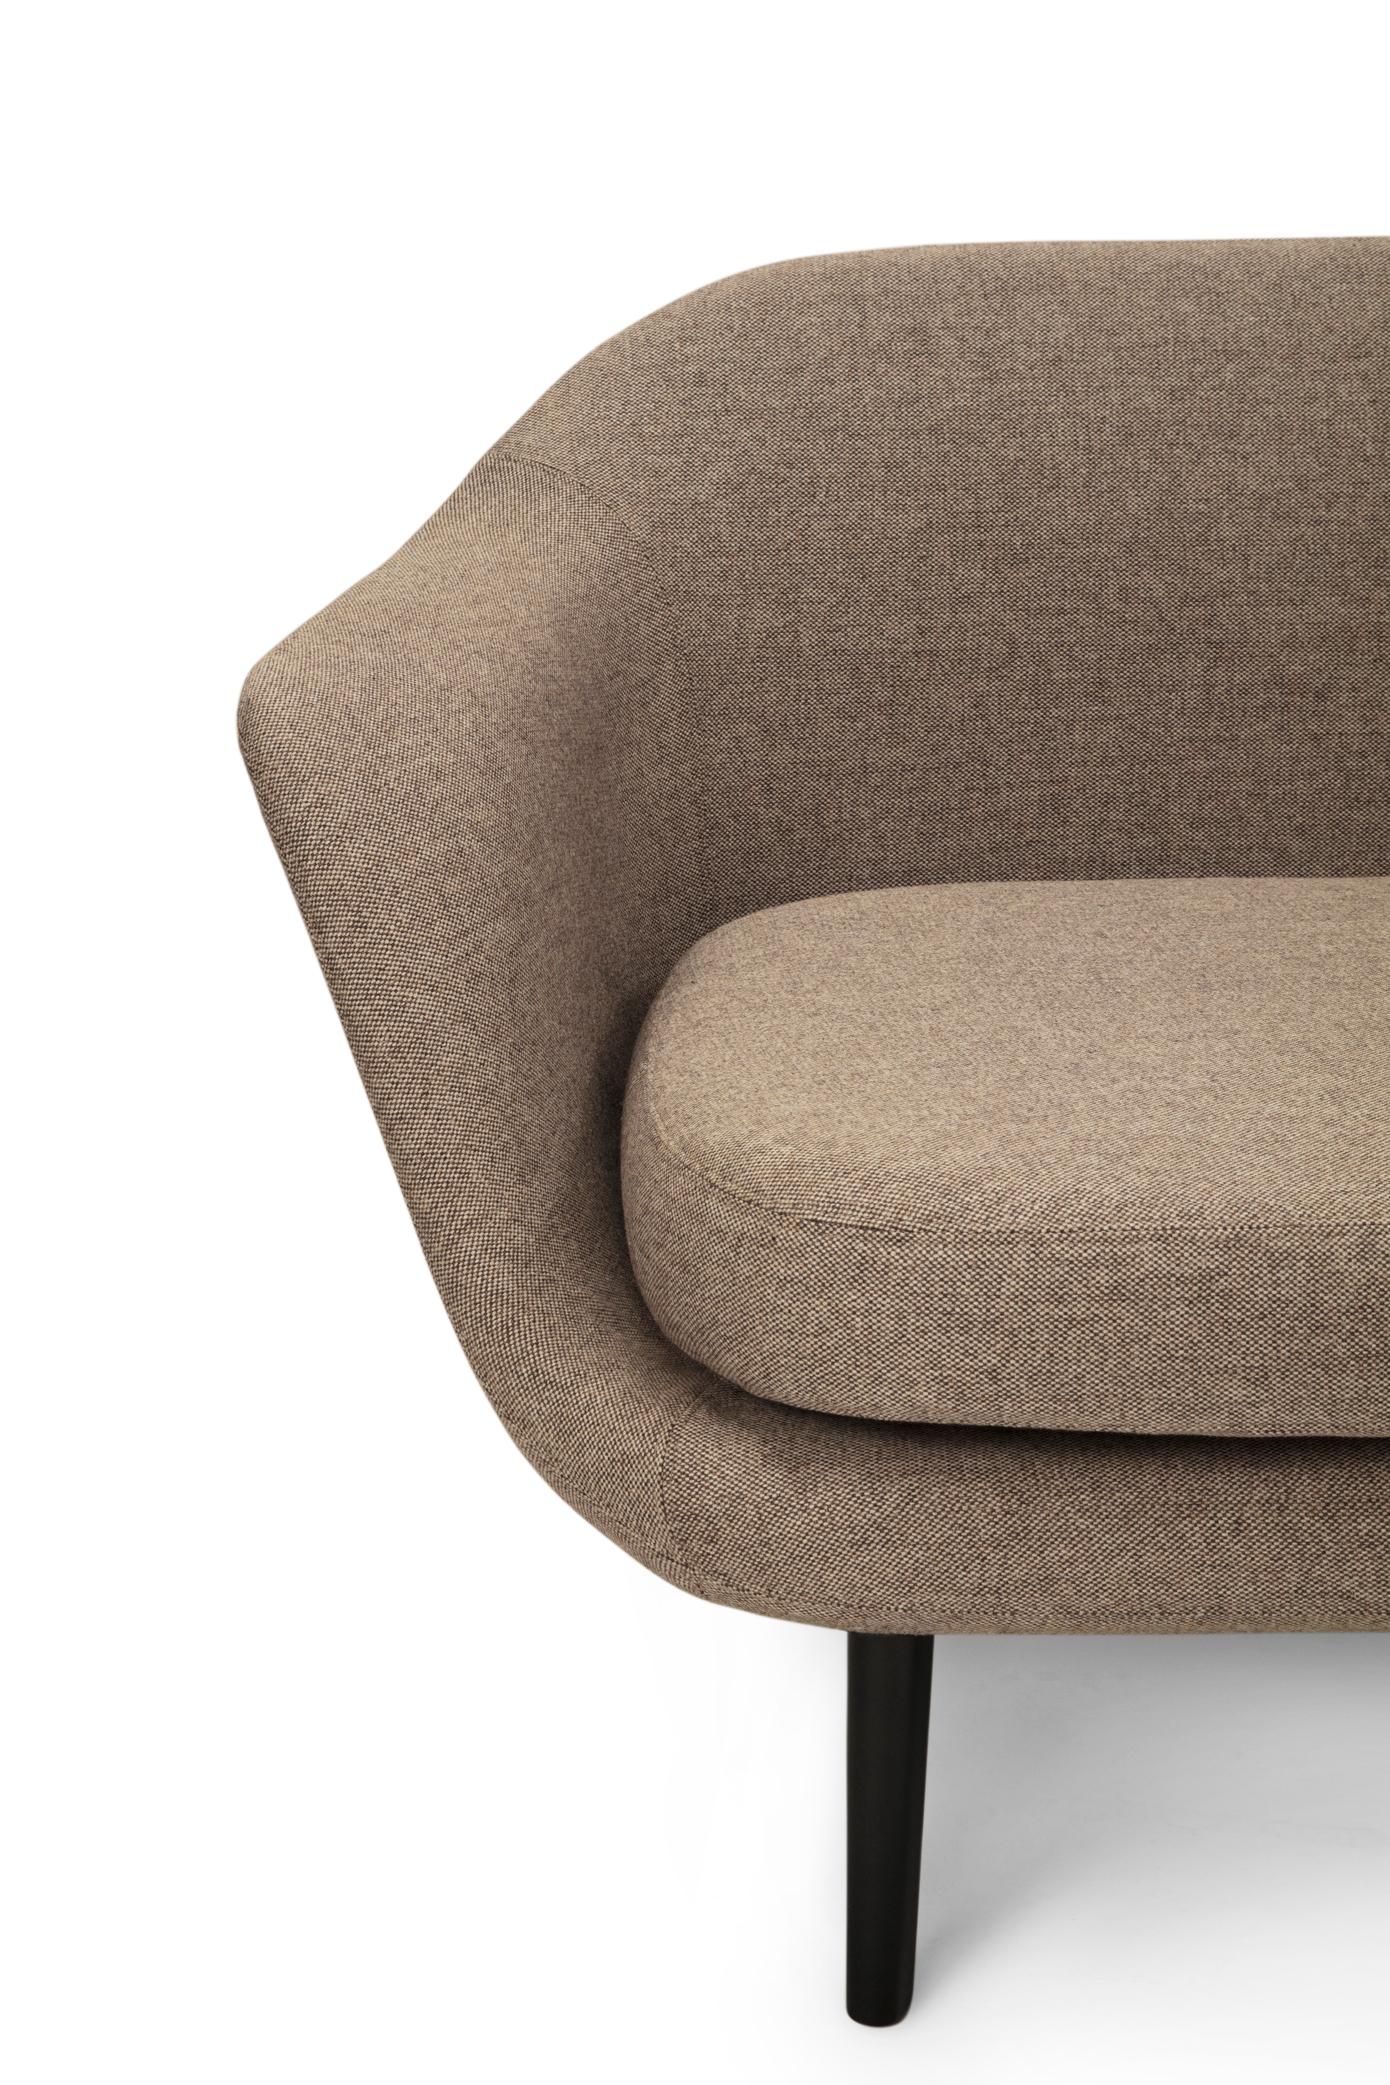 Customizable Normann Copenhagen Sum Modular Sofa 4 Seater by Simon Legald For Sale 5